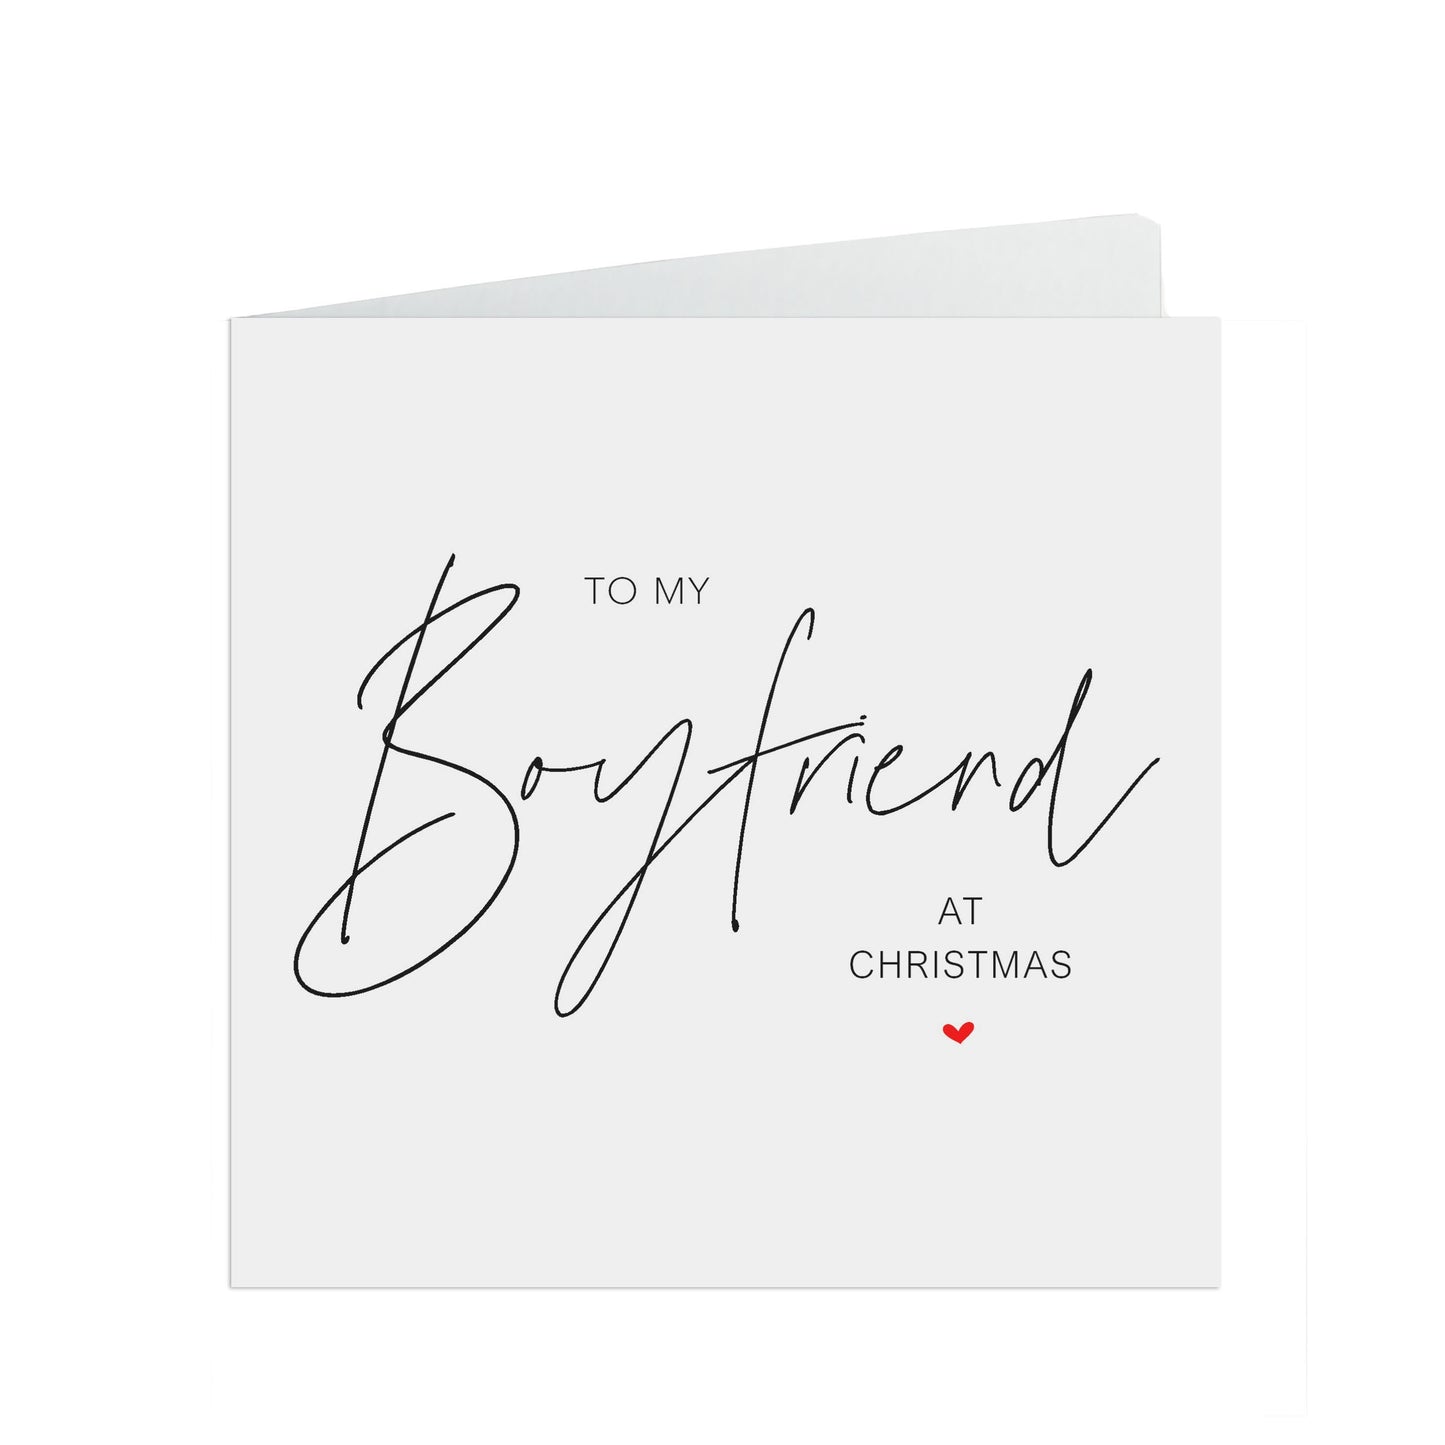 To My Boyfriend At Christmas, Simple Romantic Christmas Card